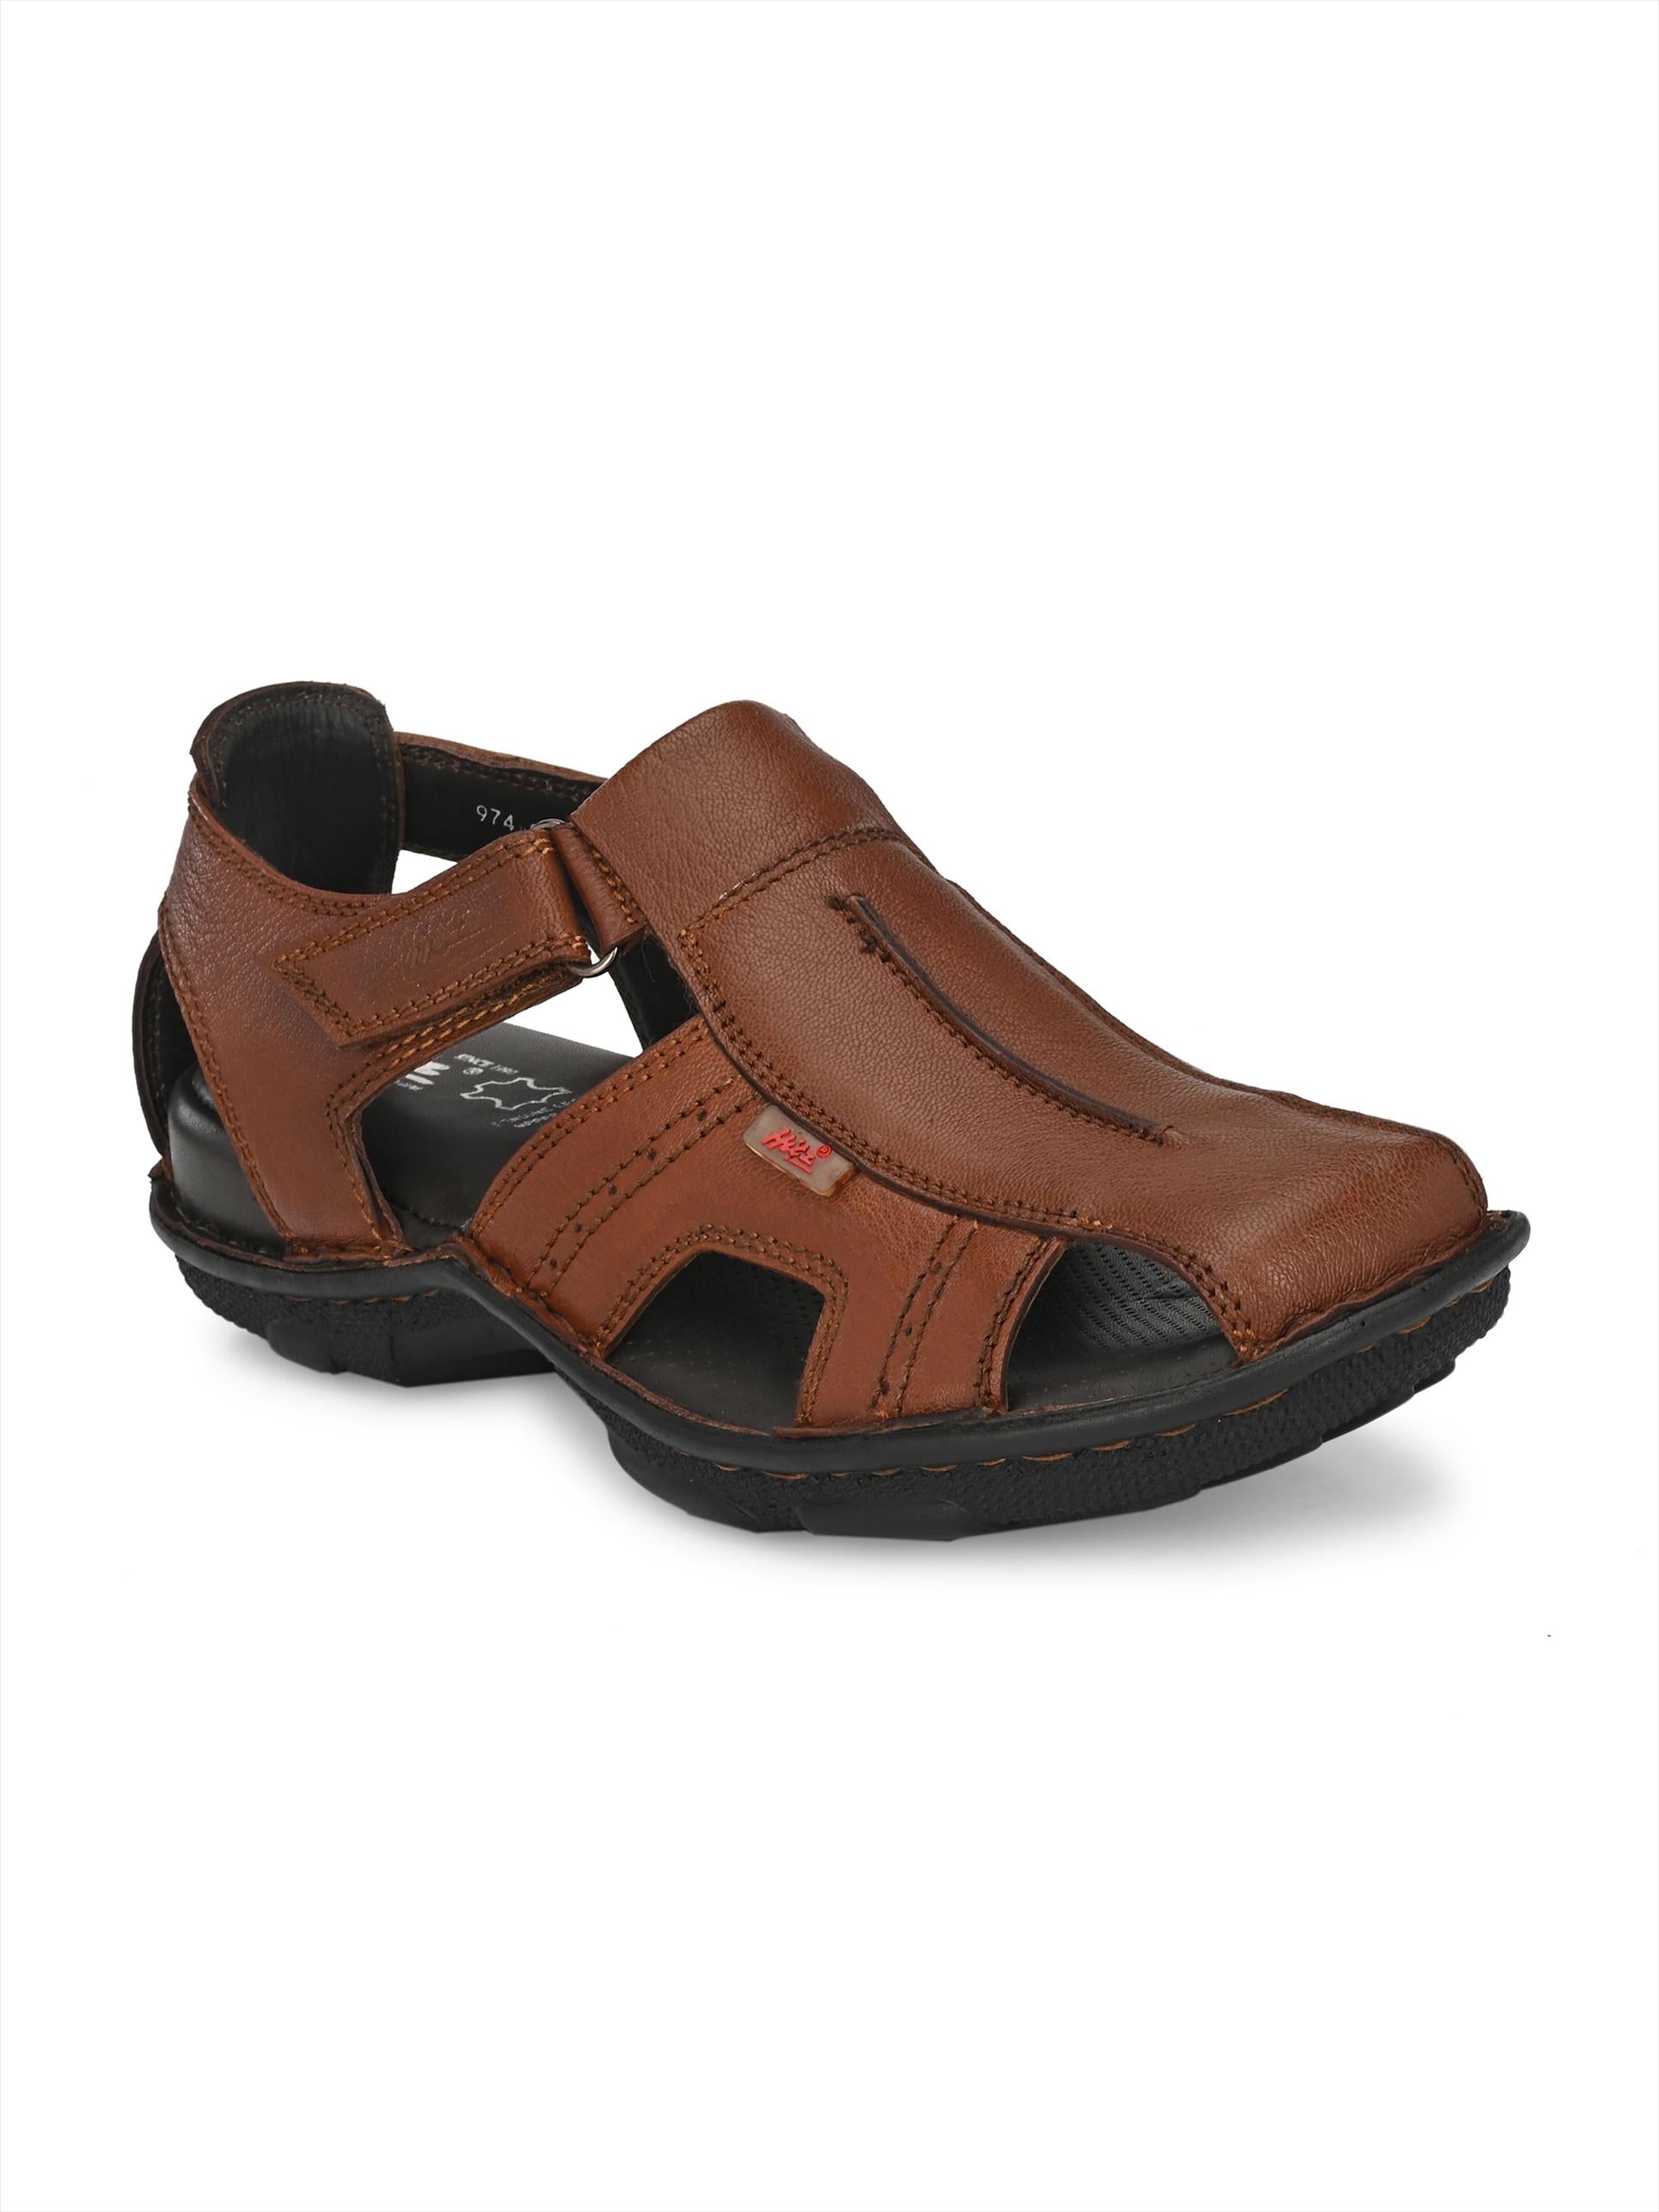 New Men's Buckle Crocodile Sandals Leather Summer Casual Sandals Tweed  Roman Sandals - AliExpress